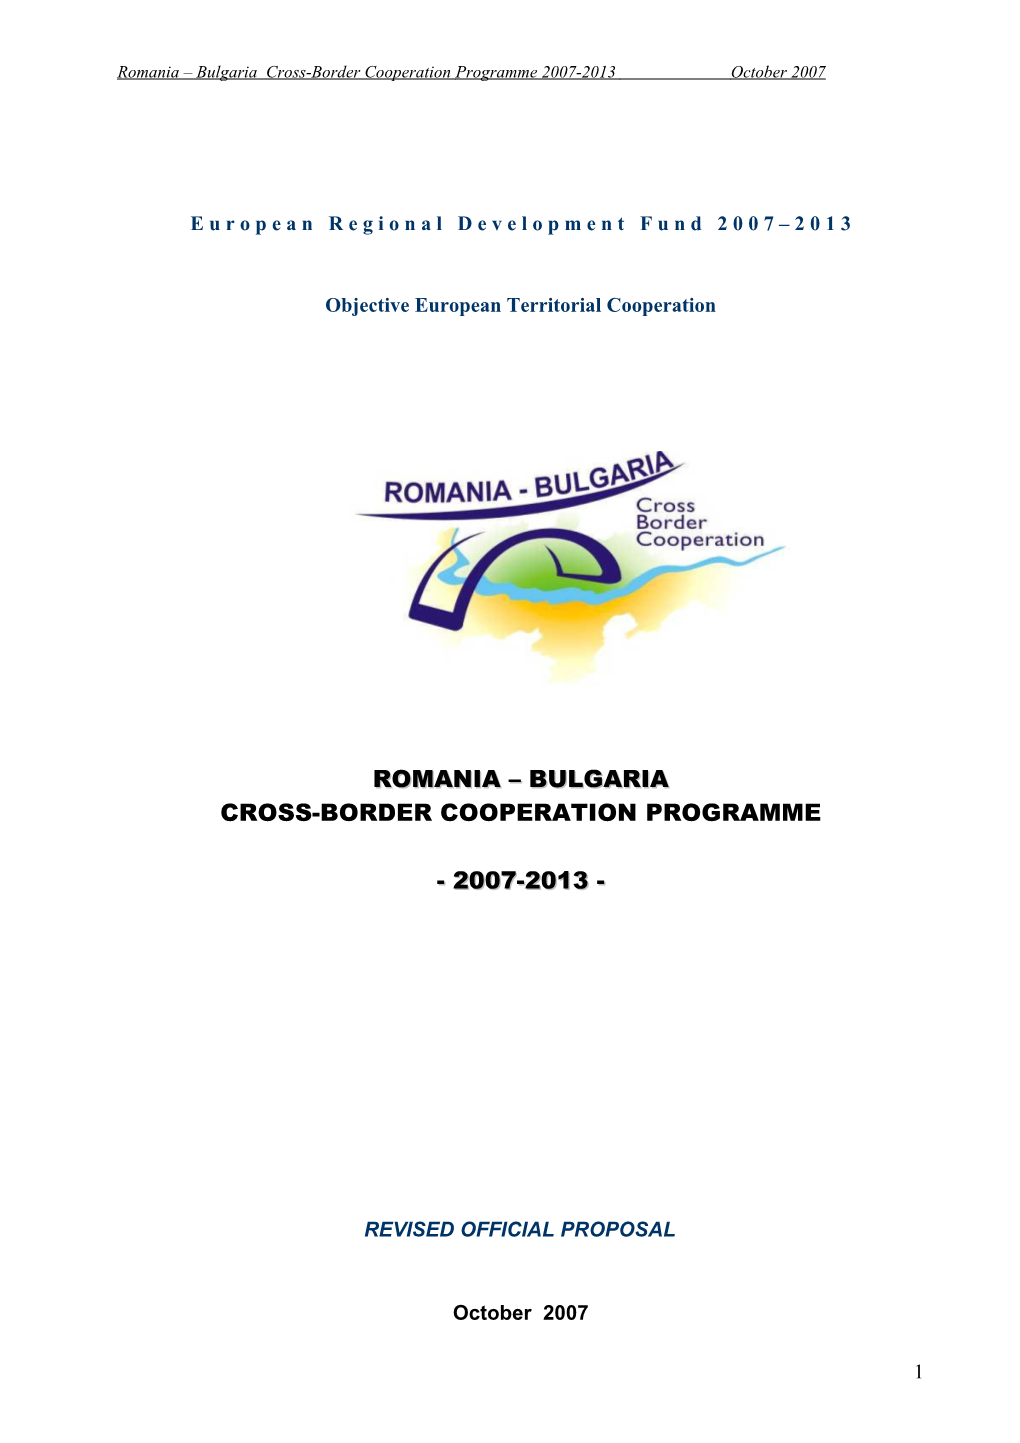 European Territorial Cross-Border Cooperation Operational Programme